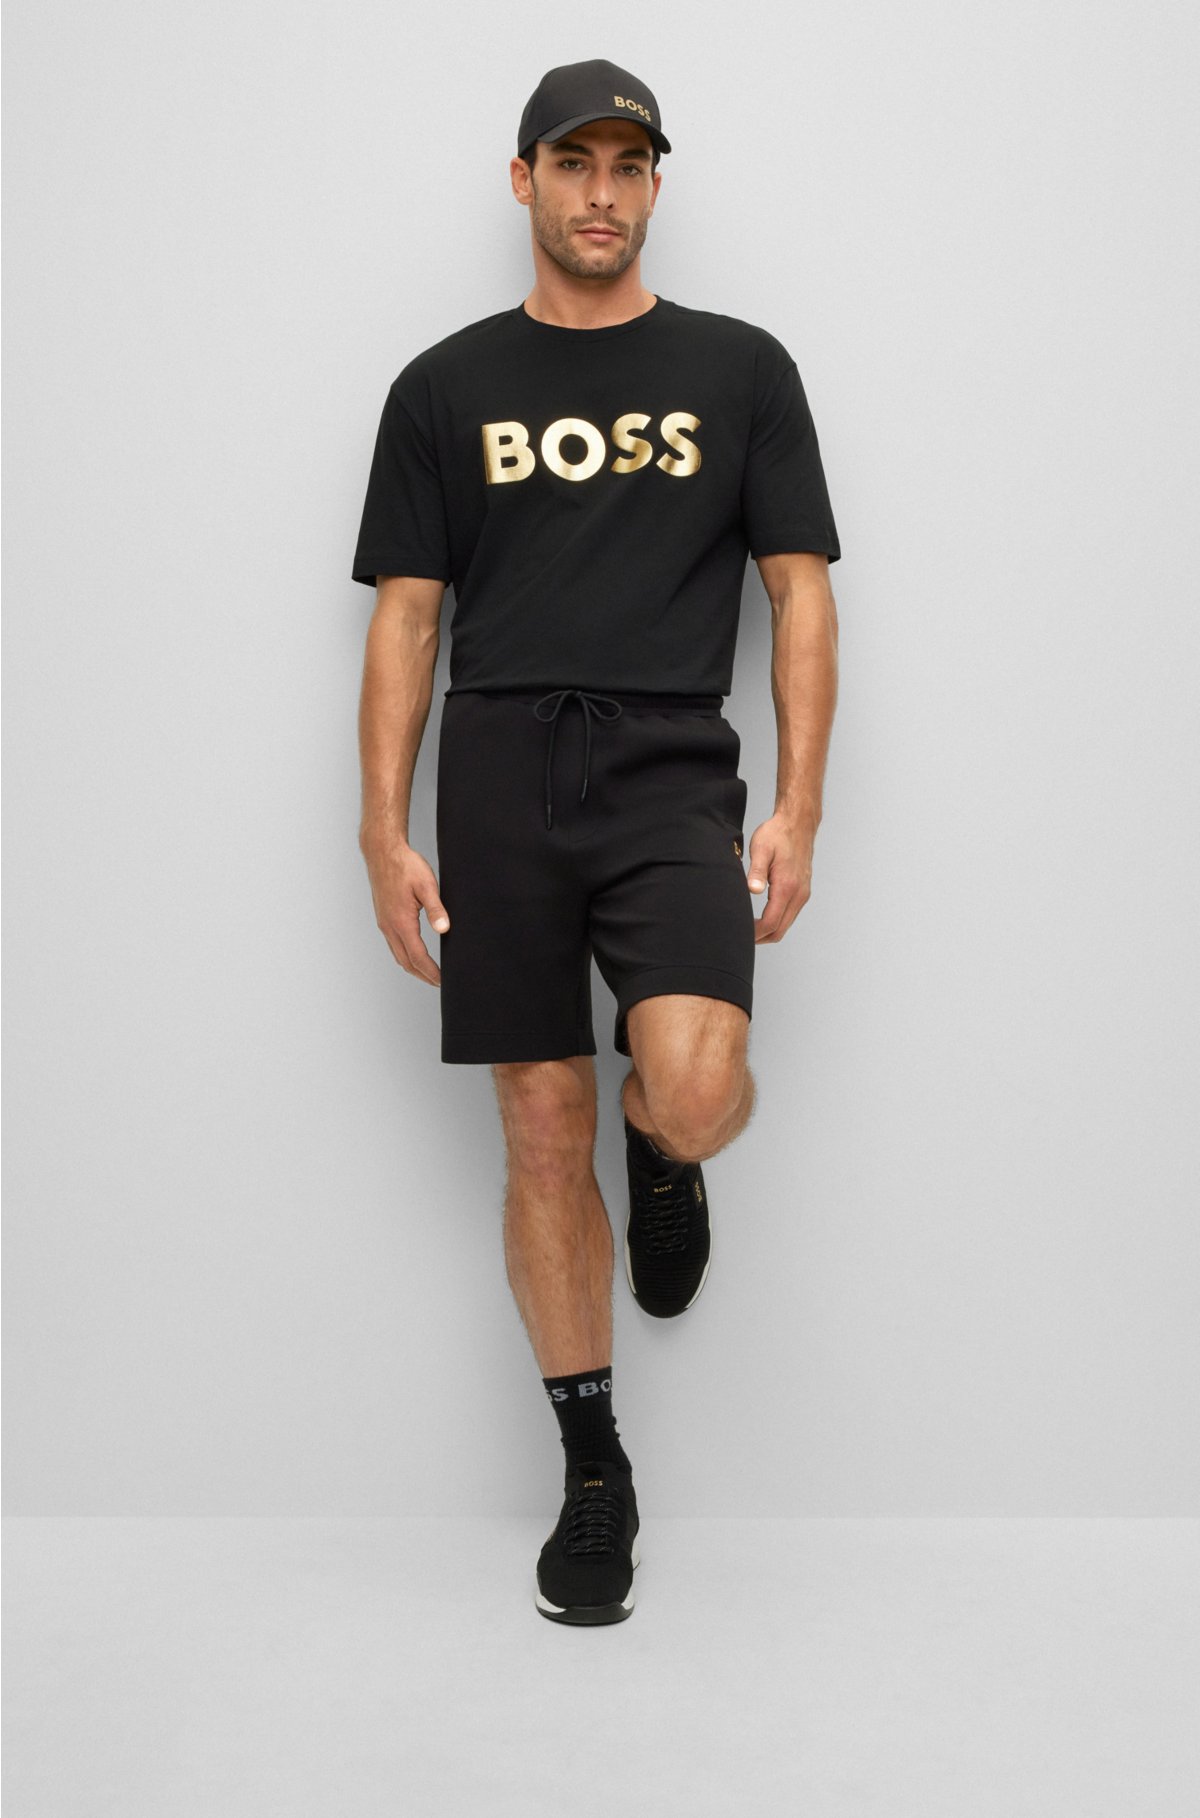 crew-neck - Cotton-jersey BOSS with print T-shirt logo